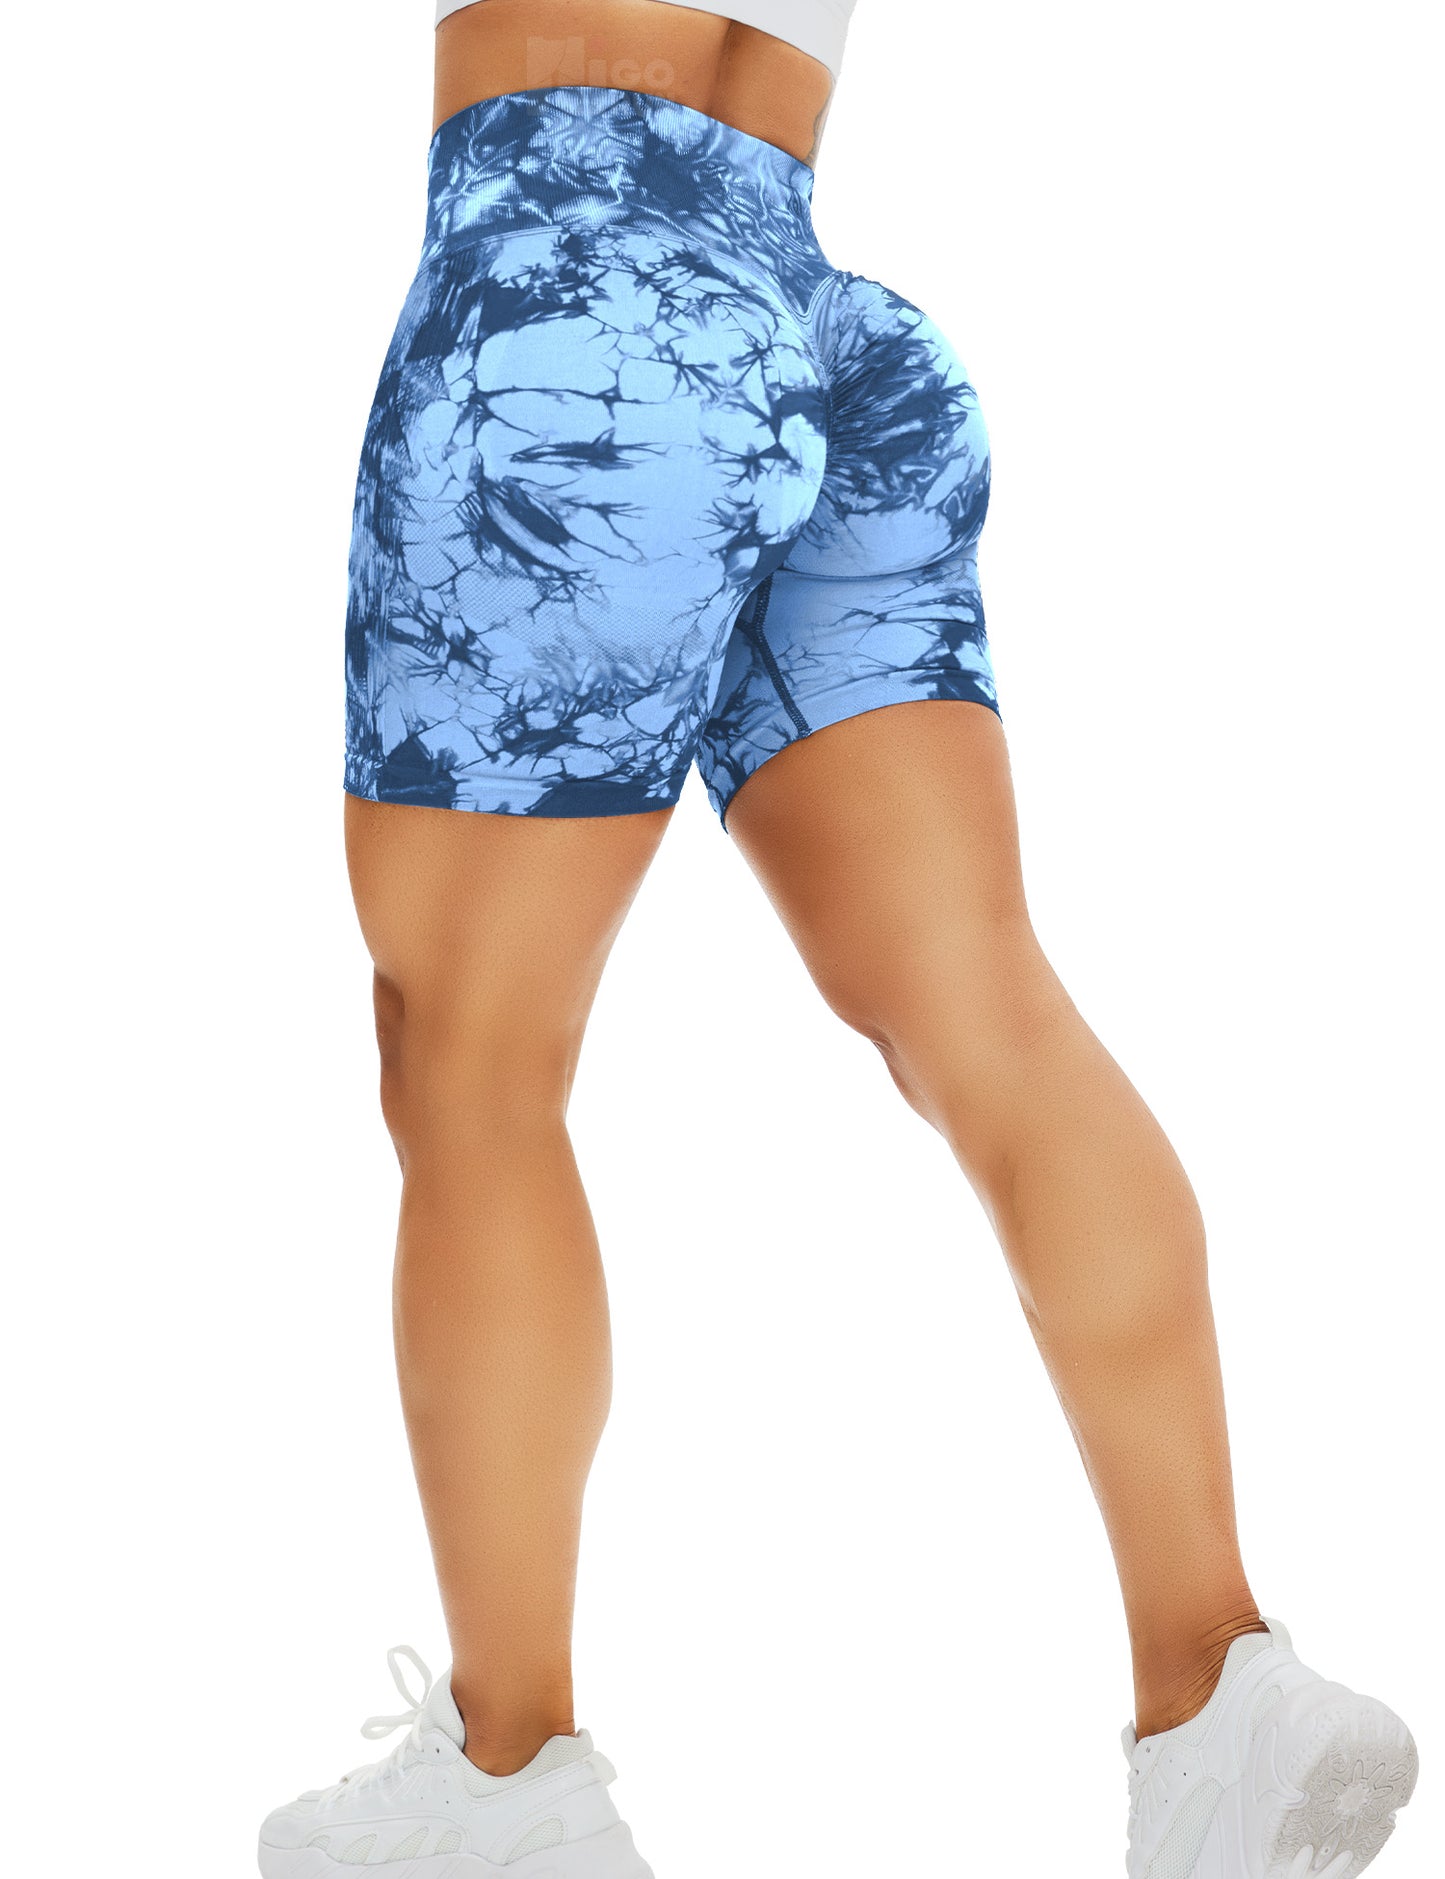 HIGORUN Women's Seamless Workout Shorts Gym Yoga High Waist Smile Contour Cycling Shorts tie dye blue